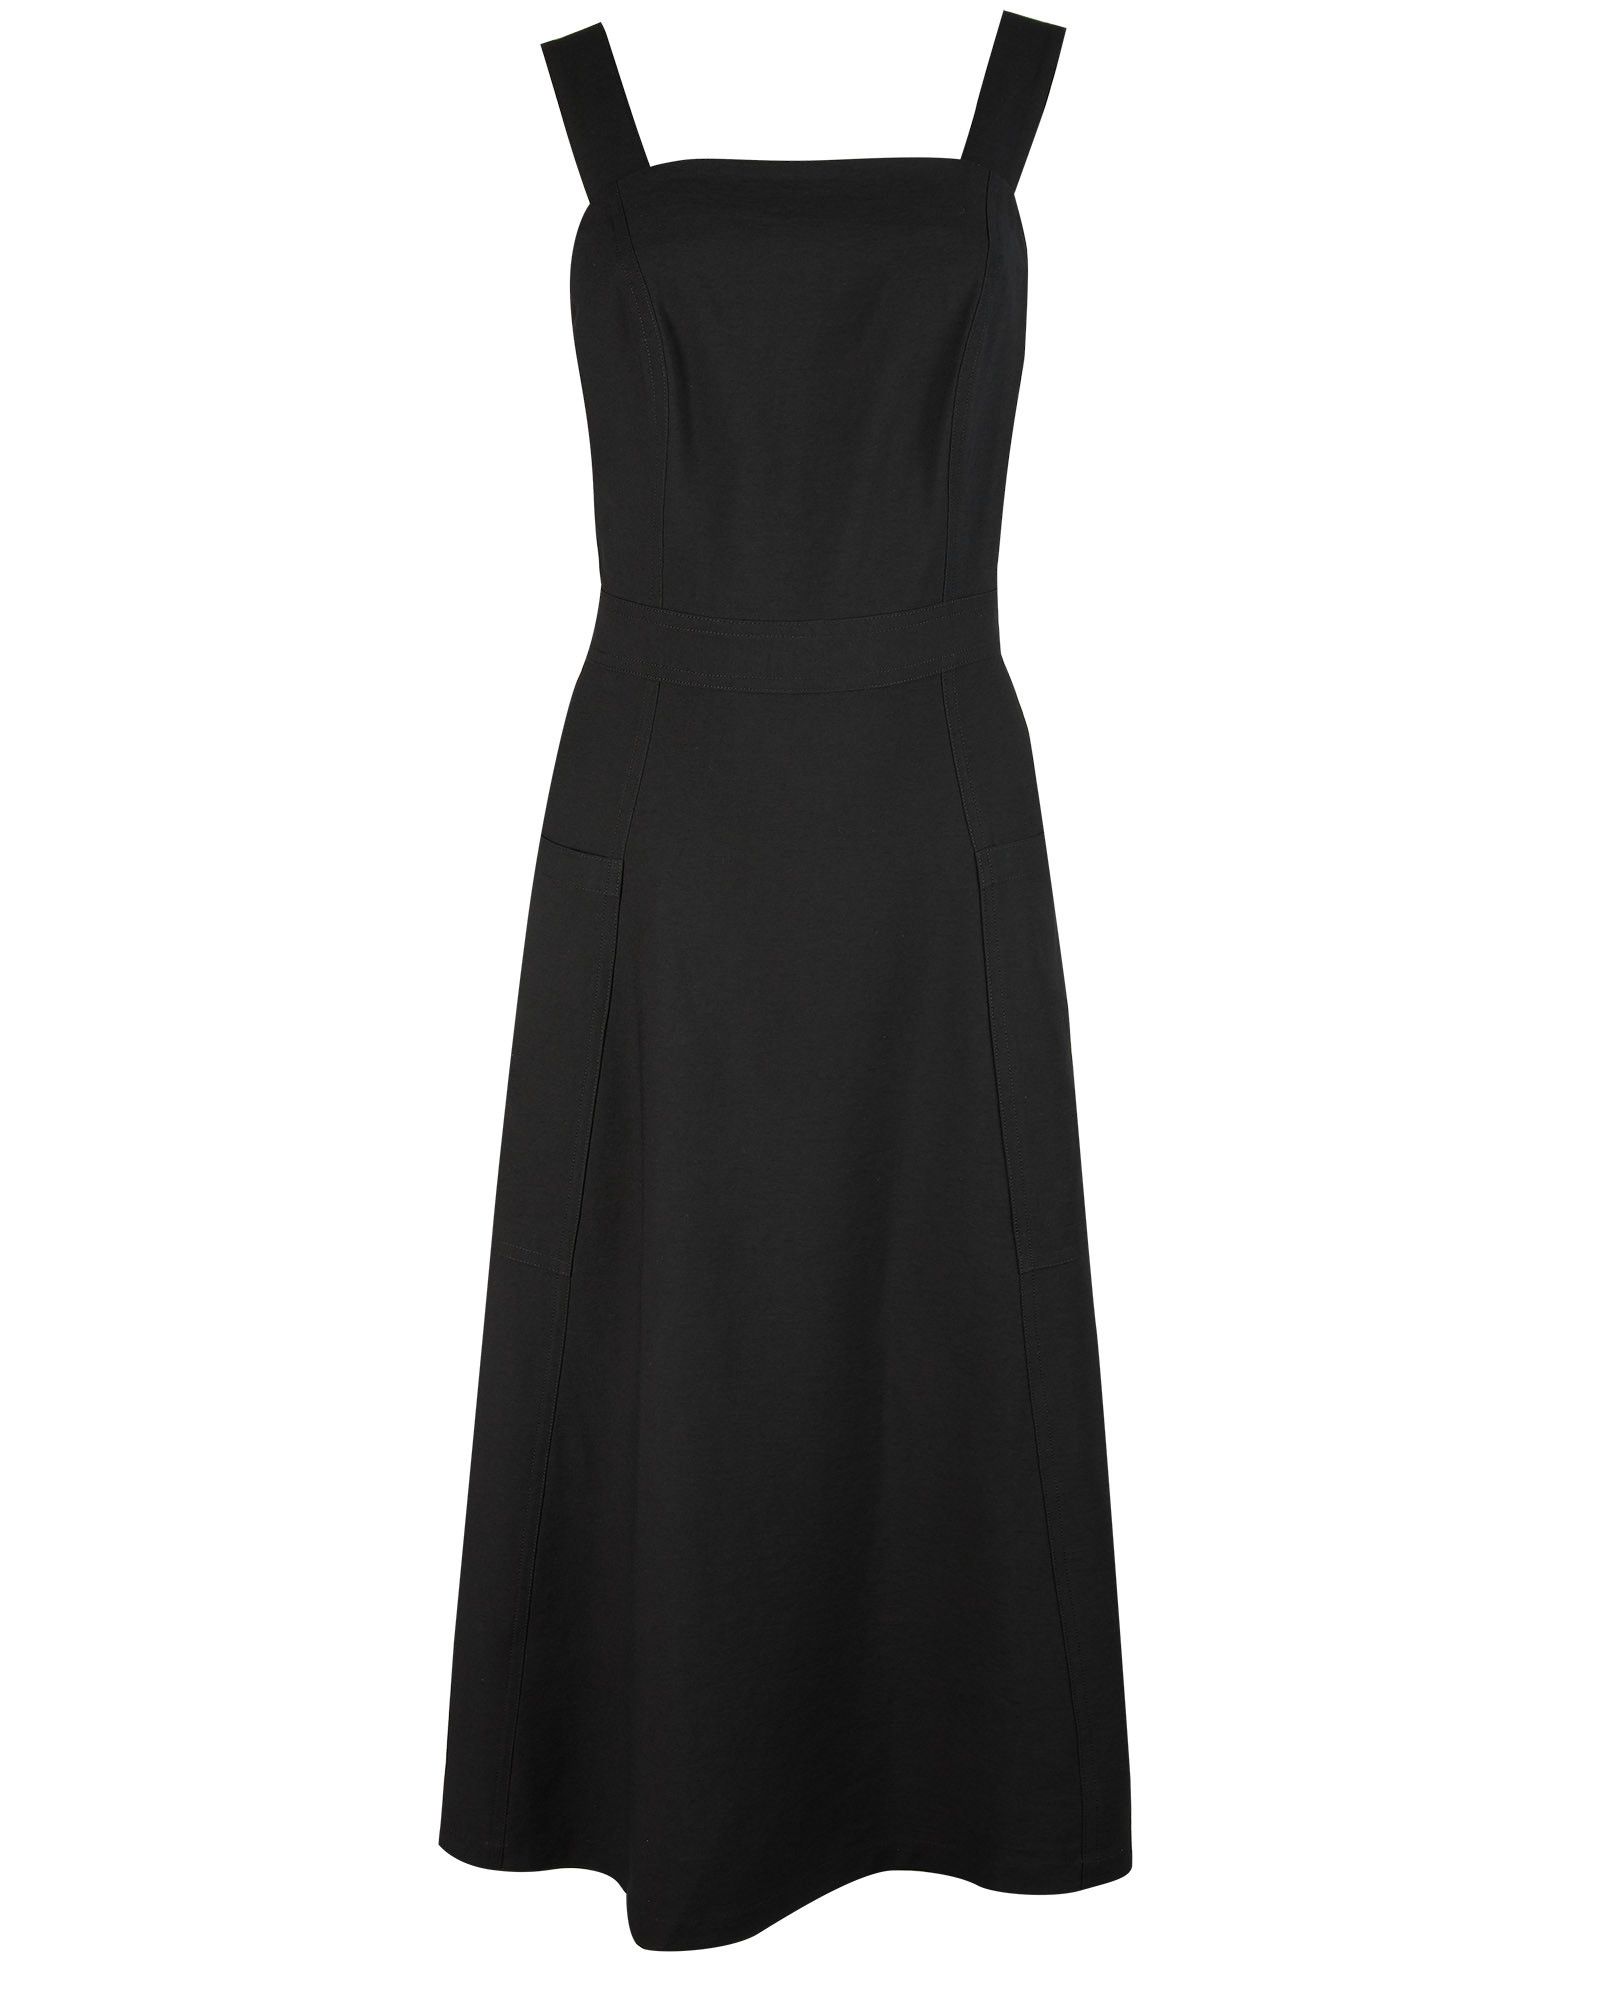 black tight pinafore dress